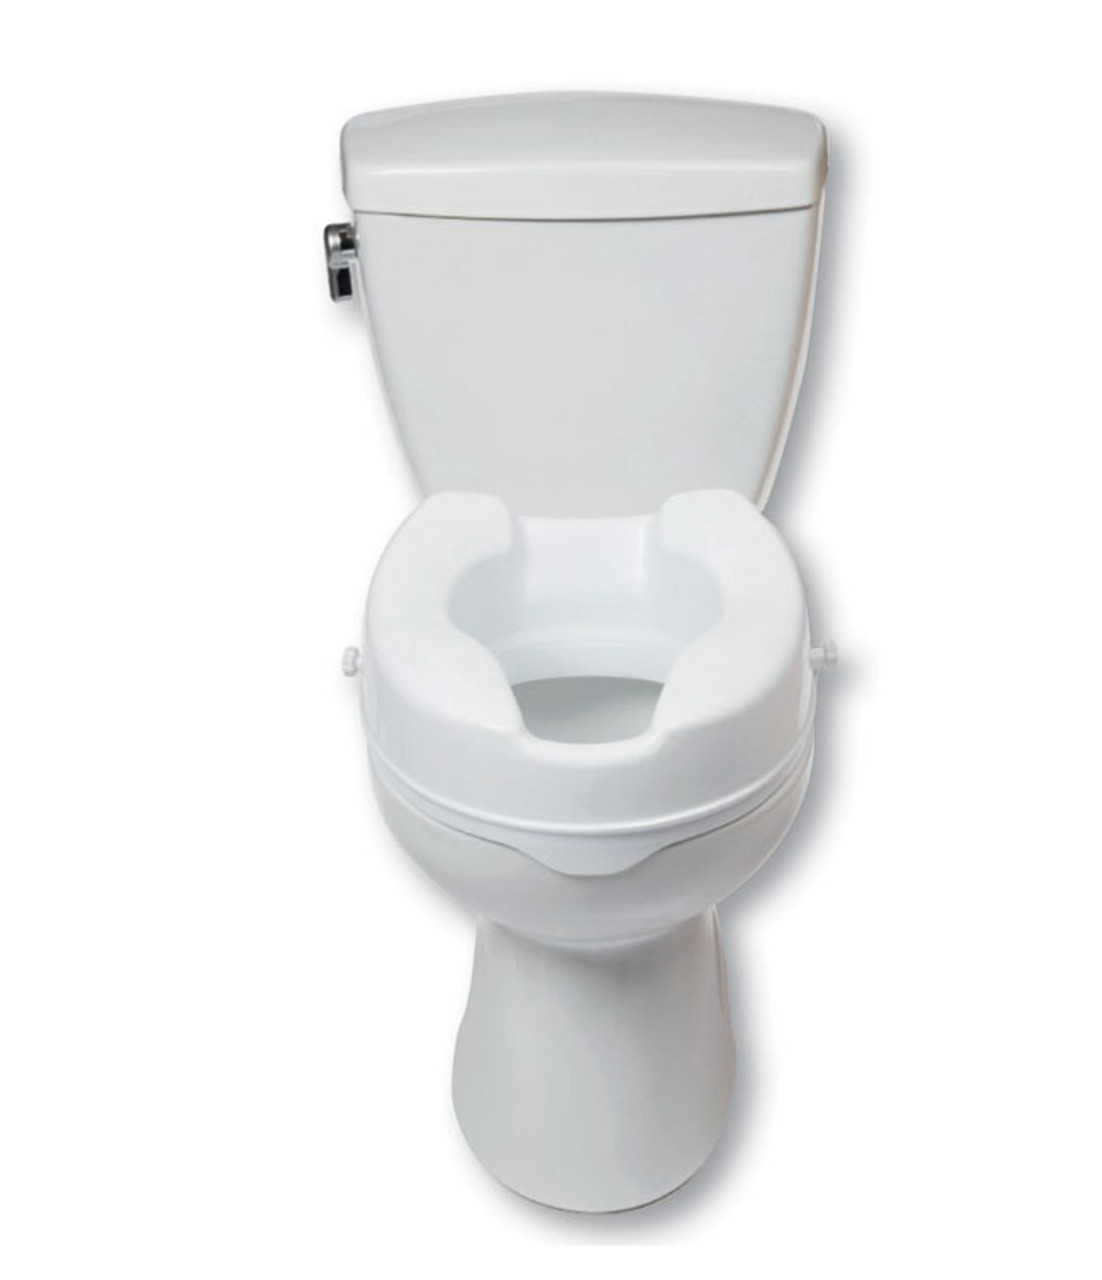 MOBB Health Care MHRTSD 4" Raised Toilet Seat Weight limit 300lbs (MOBB Health Care MHRTSD)